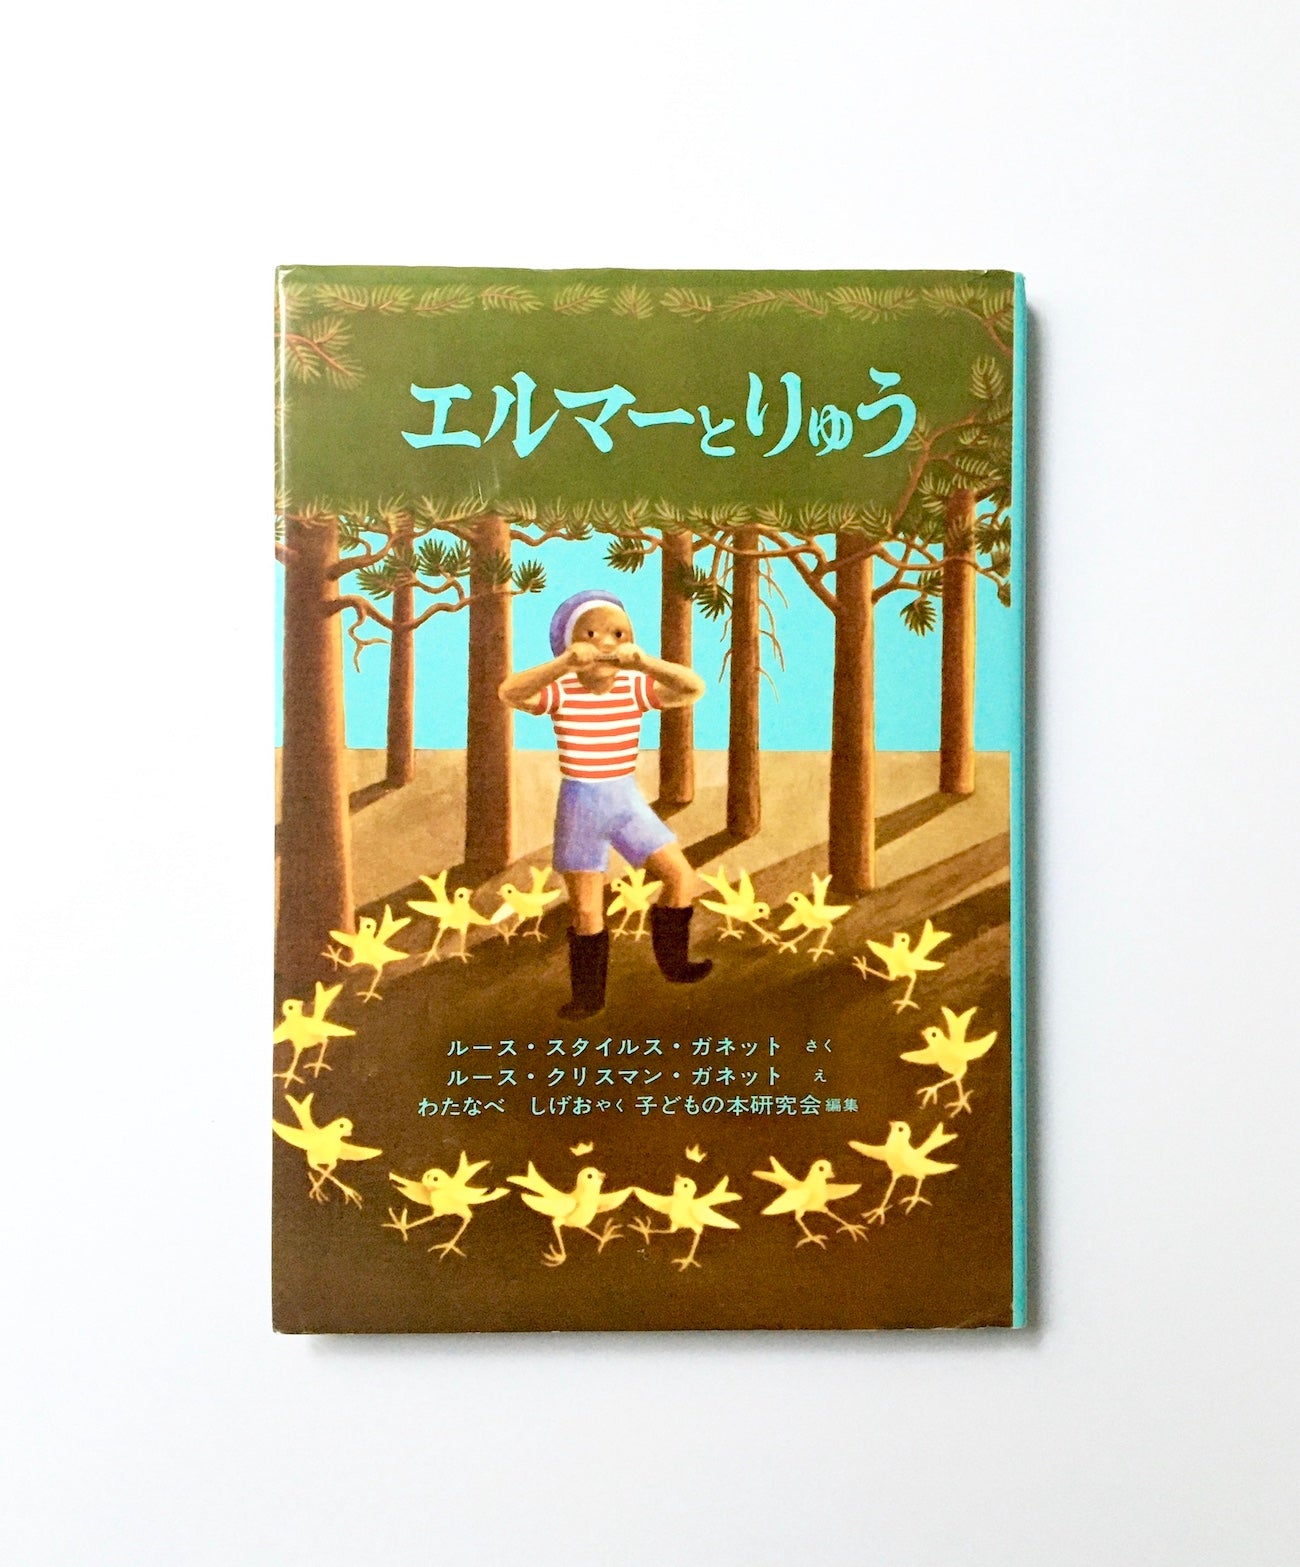 絵本・児童書 – Tsubaki japanese bookstore